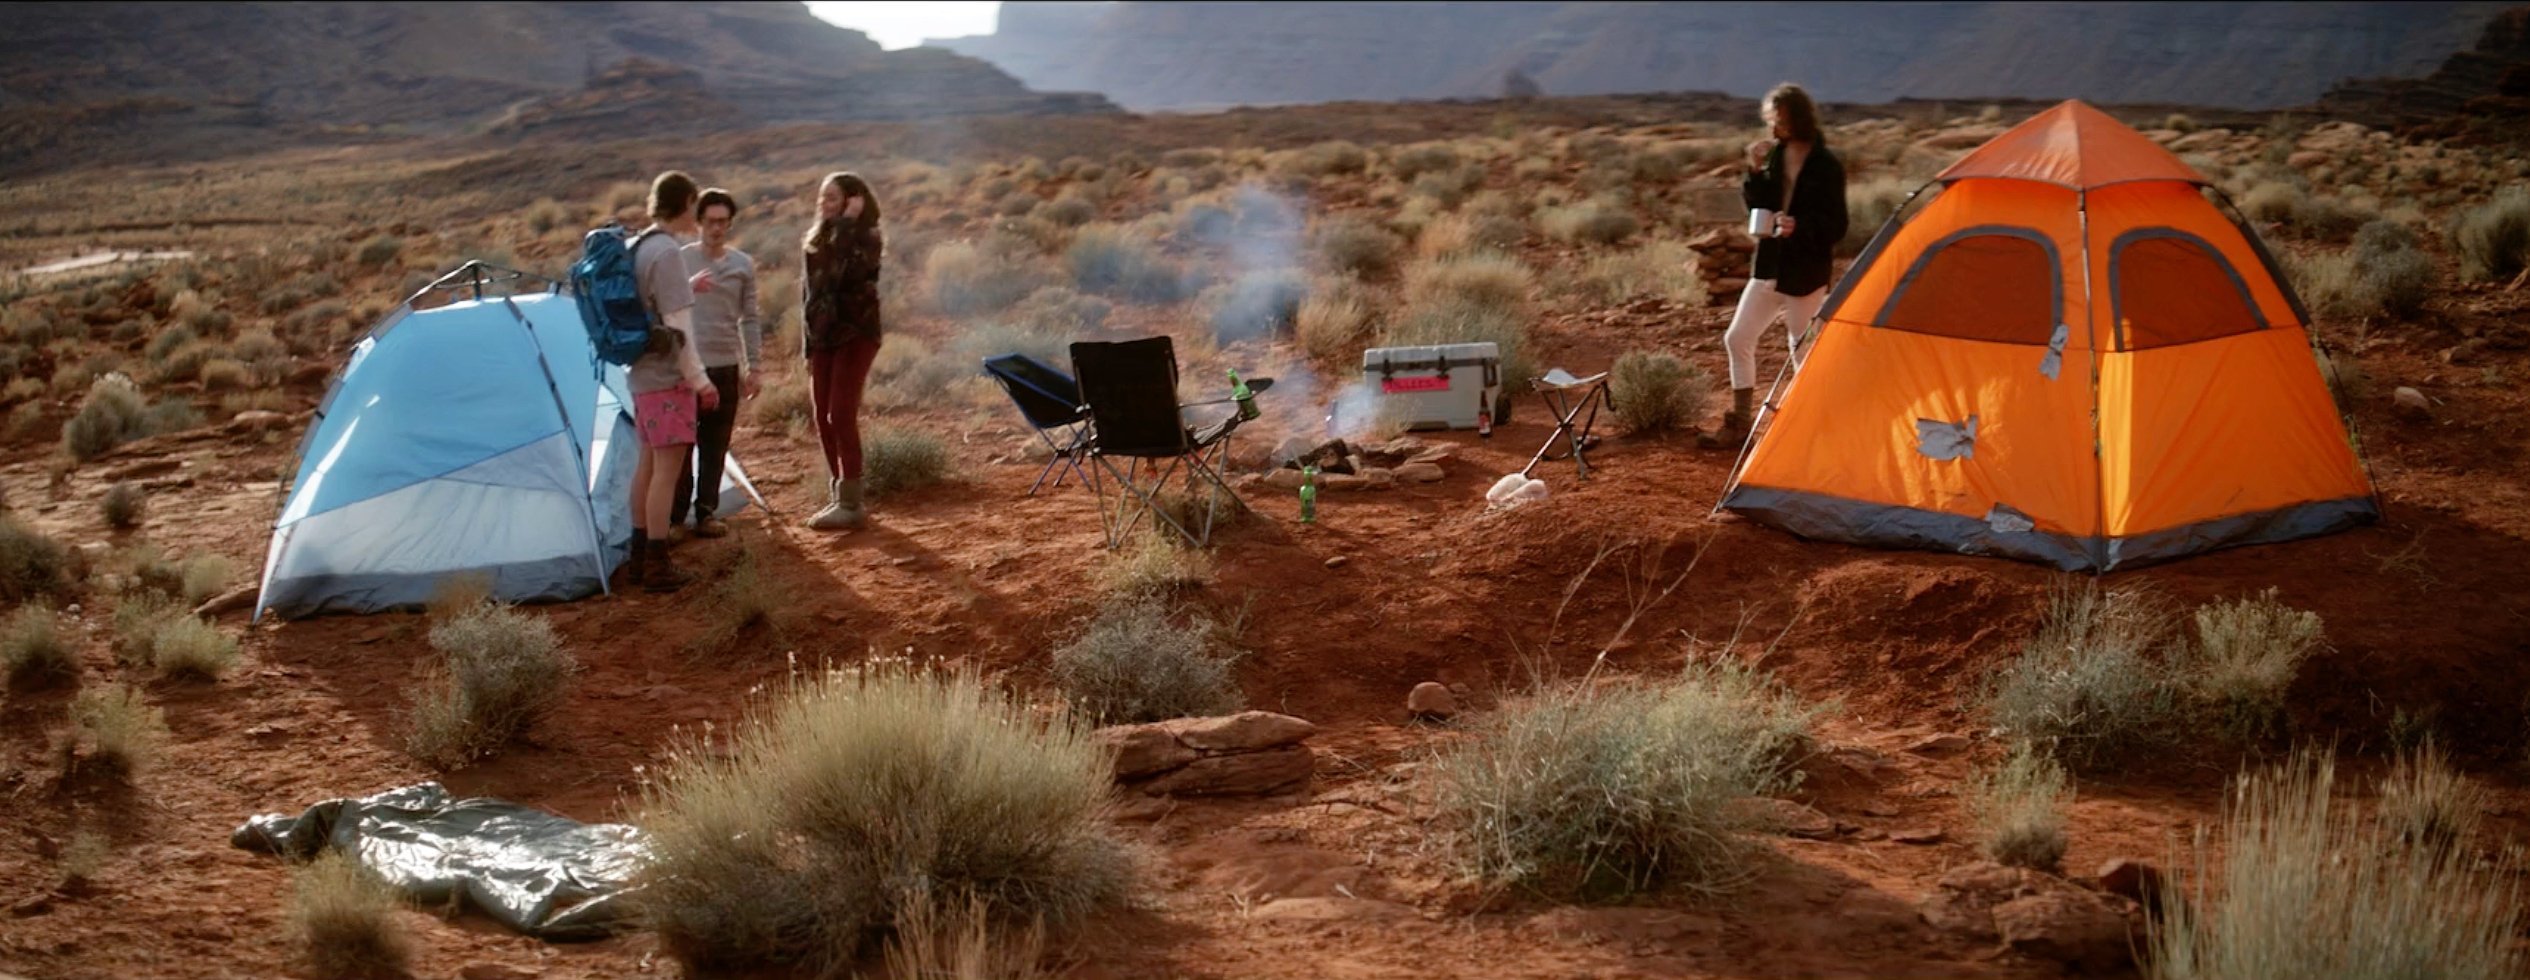 First Look Trailer for Supernatural Thriller 'Delicate Arch' Set in Utah